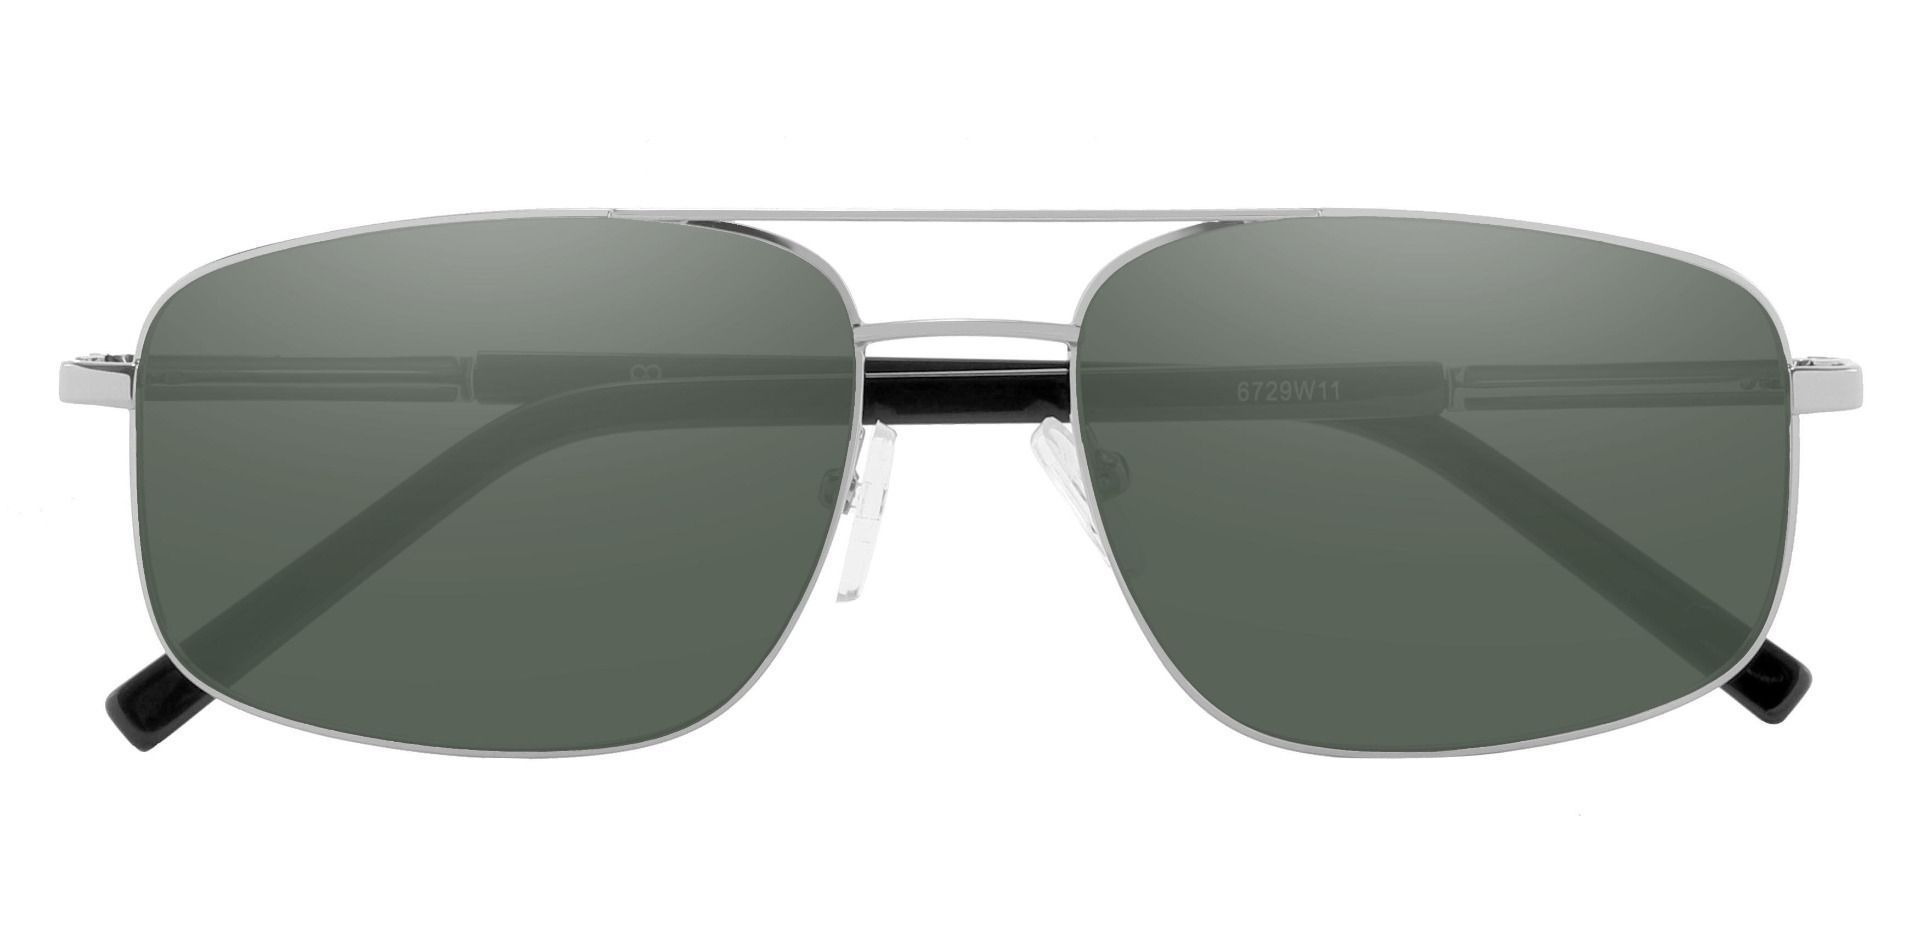 Davenport Aviator Non-Rx Sunglasses - Silver Frame With Green Lenses